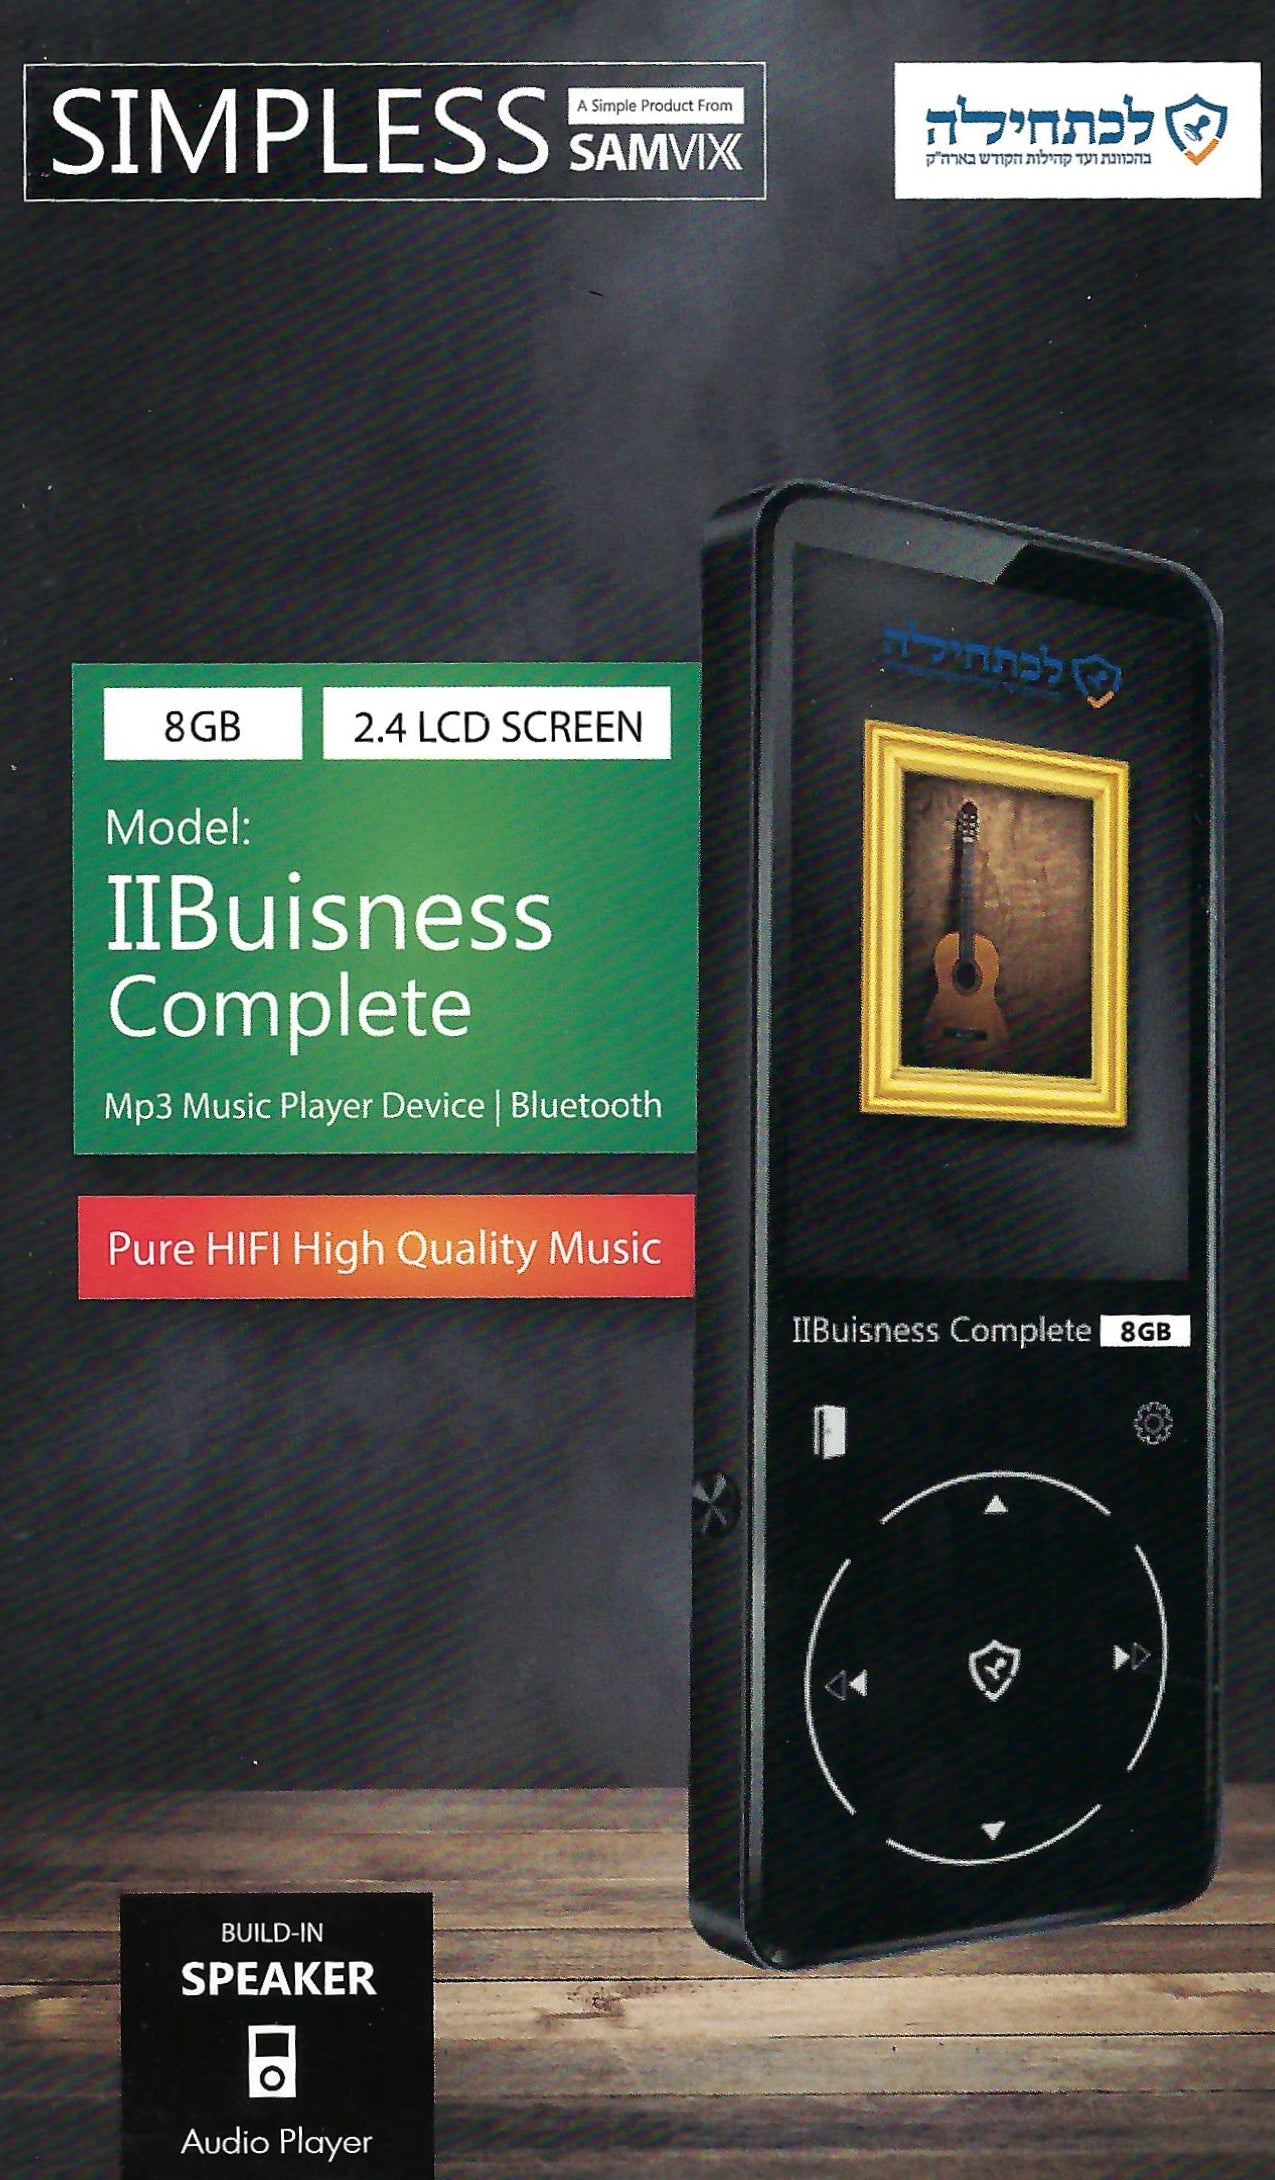 Samvix - IIBuisiness Complete MP3 Player - 8GB